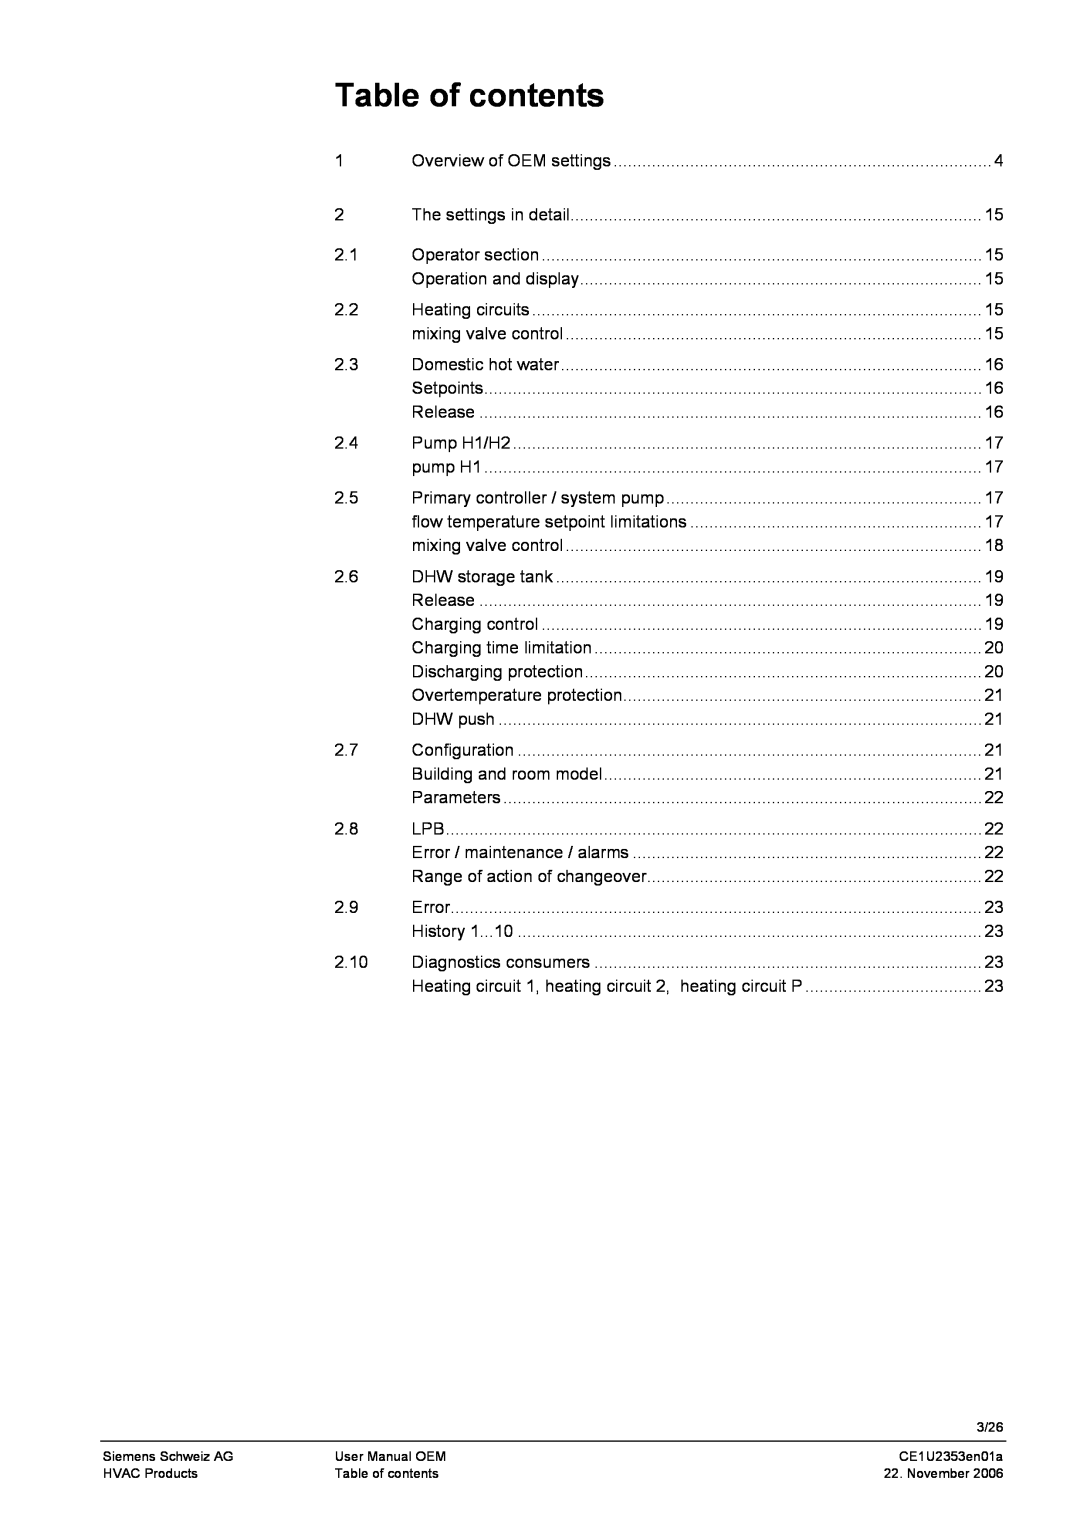 Siemens CE1U2353en01a user manual Table of contents 